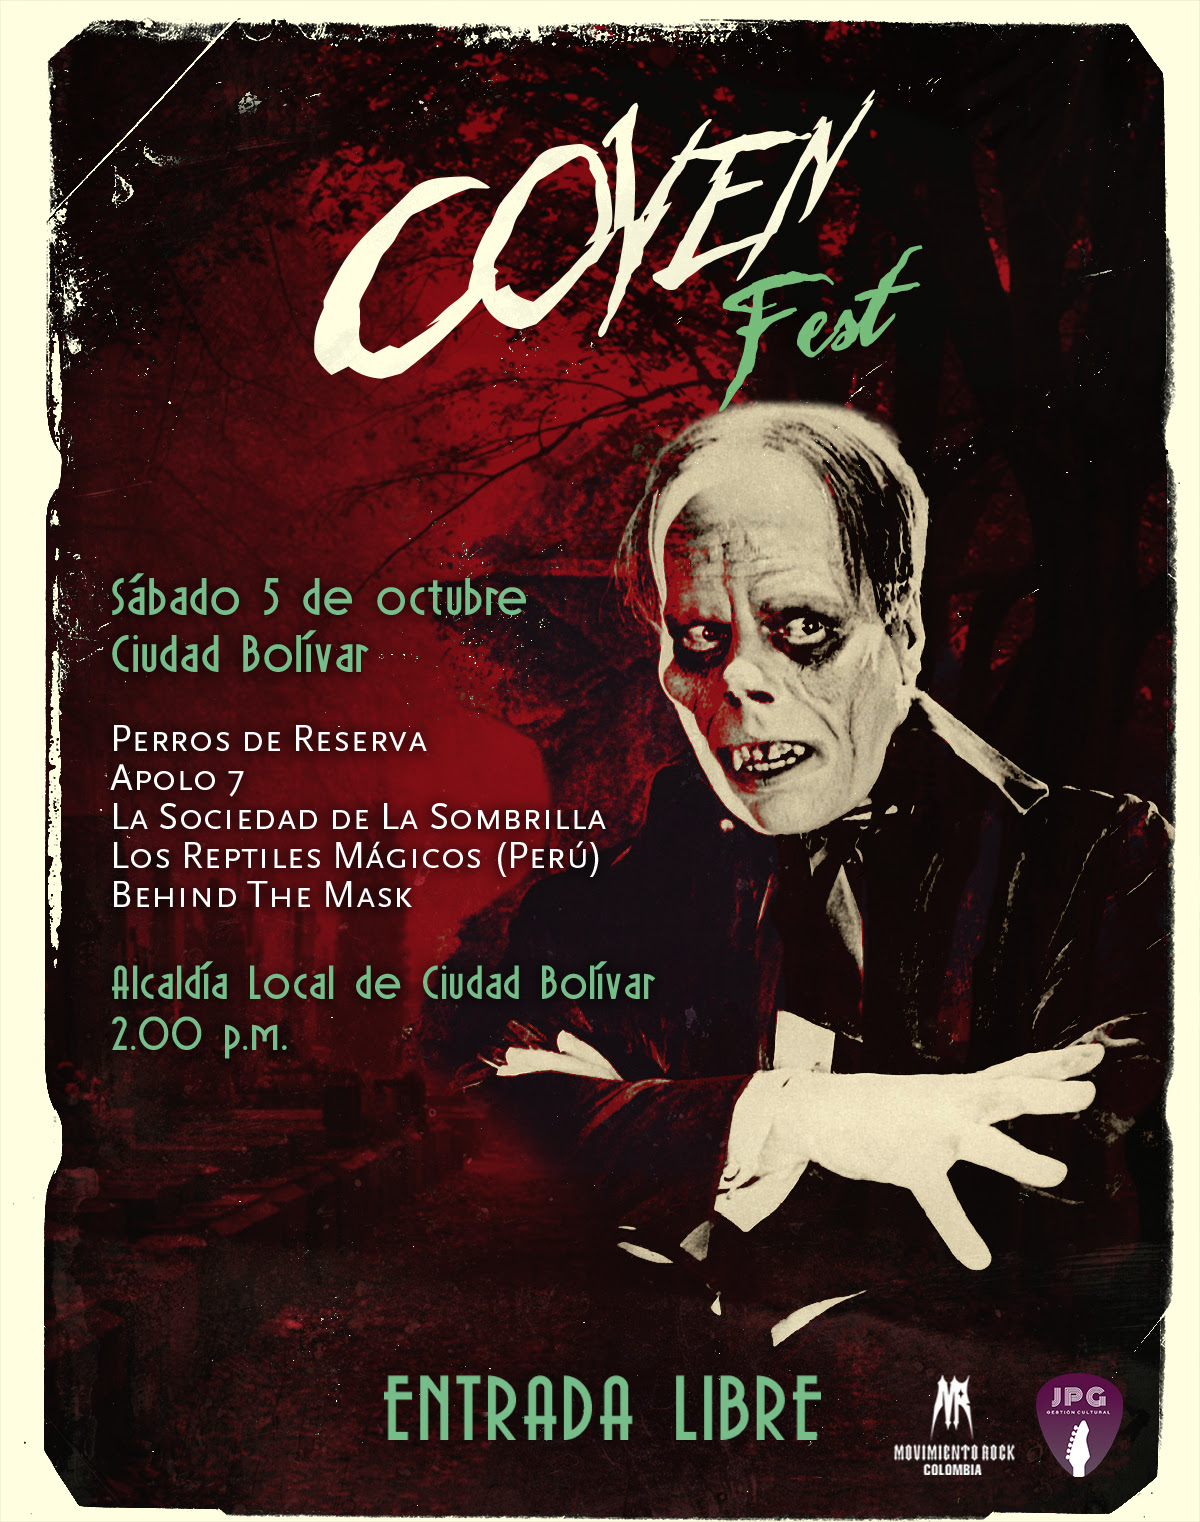 08fe7245 f86c 4437 8fec 69375169fff0 - Halloween inicia temprano en Bogotá con el COVEN FEST de PERROS DE RESERVA